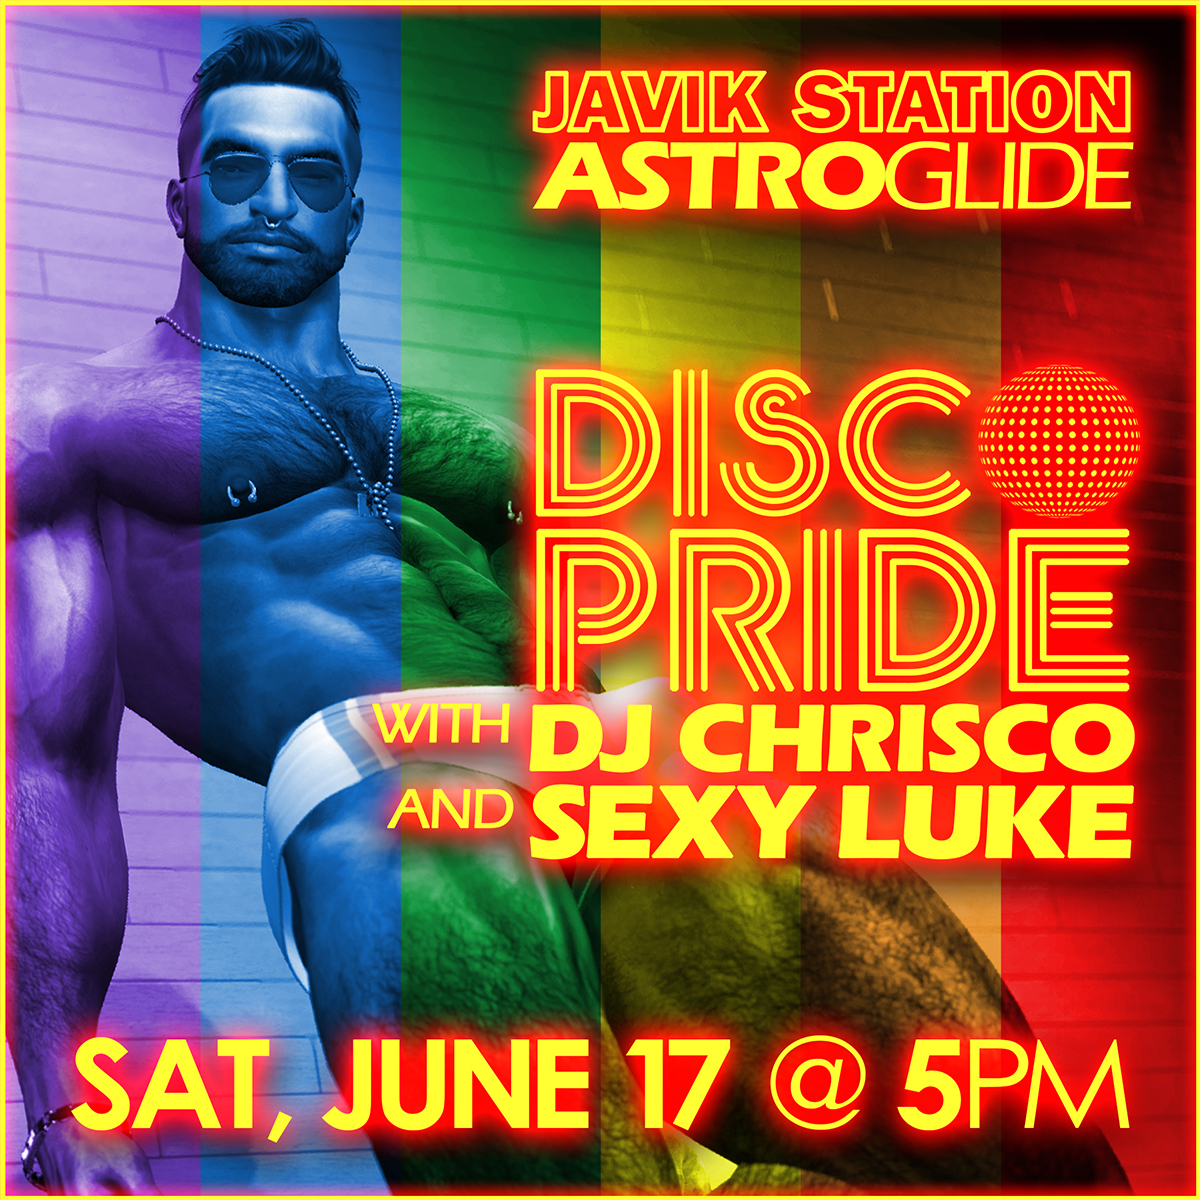 ASTROGLIDE DISCO PRIDE with DJ CHRISCO!